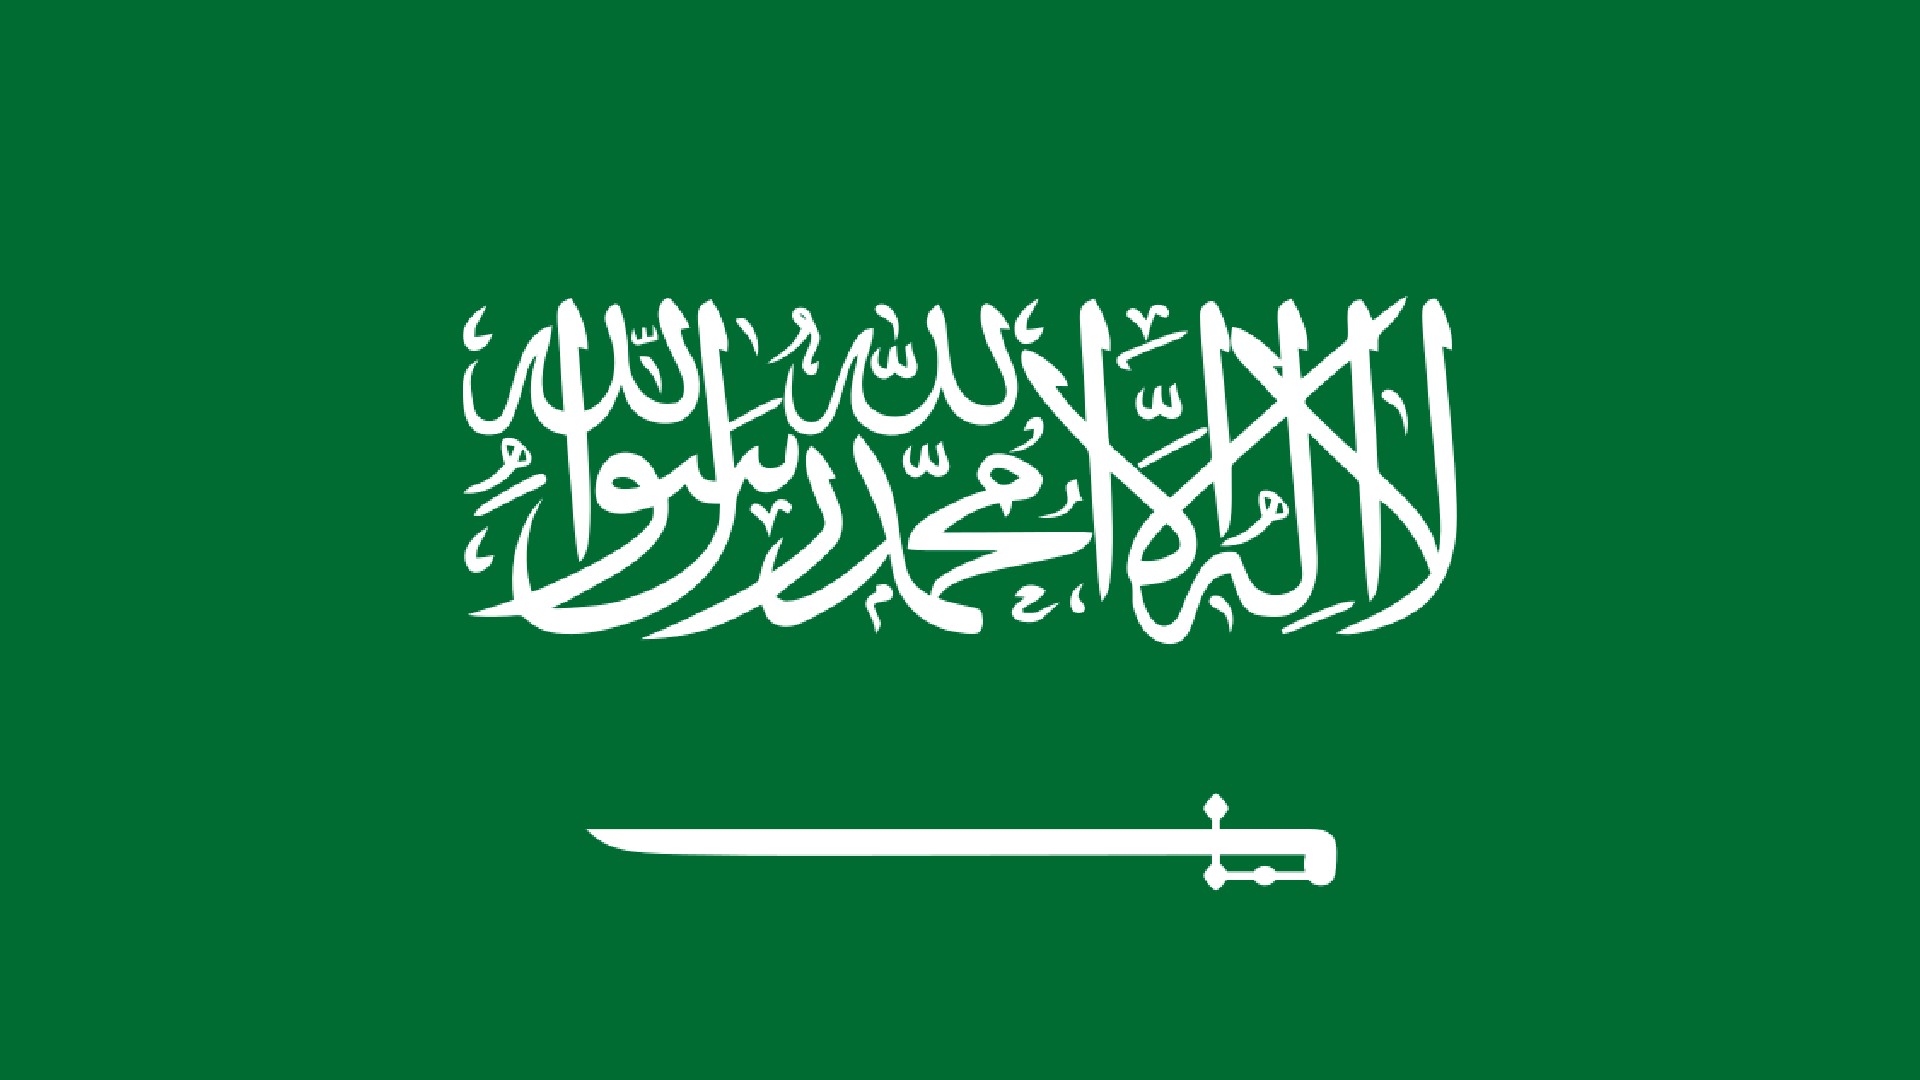 An image of the flag of Saudi Arabia